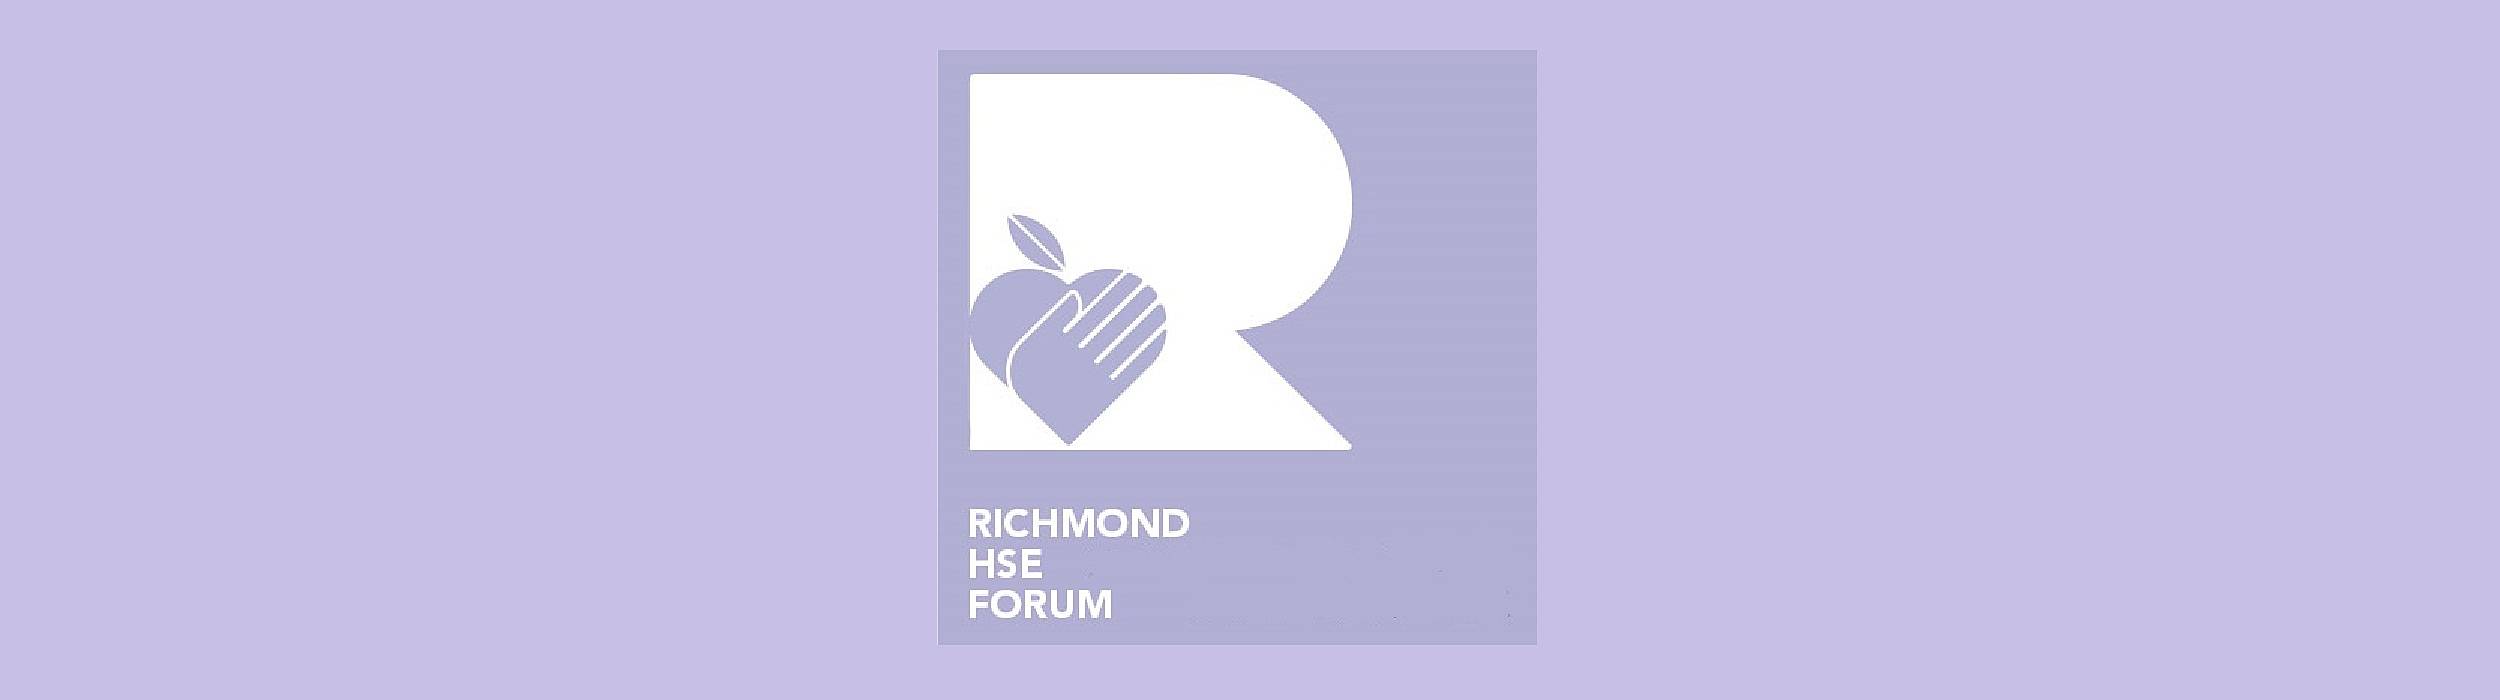 Richmond hse forum autumn